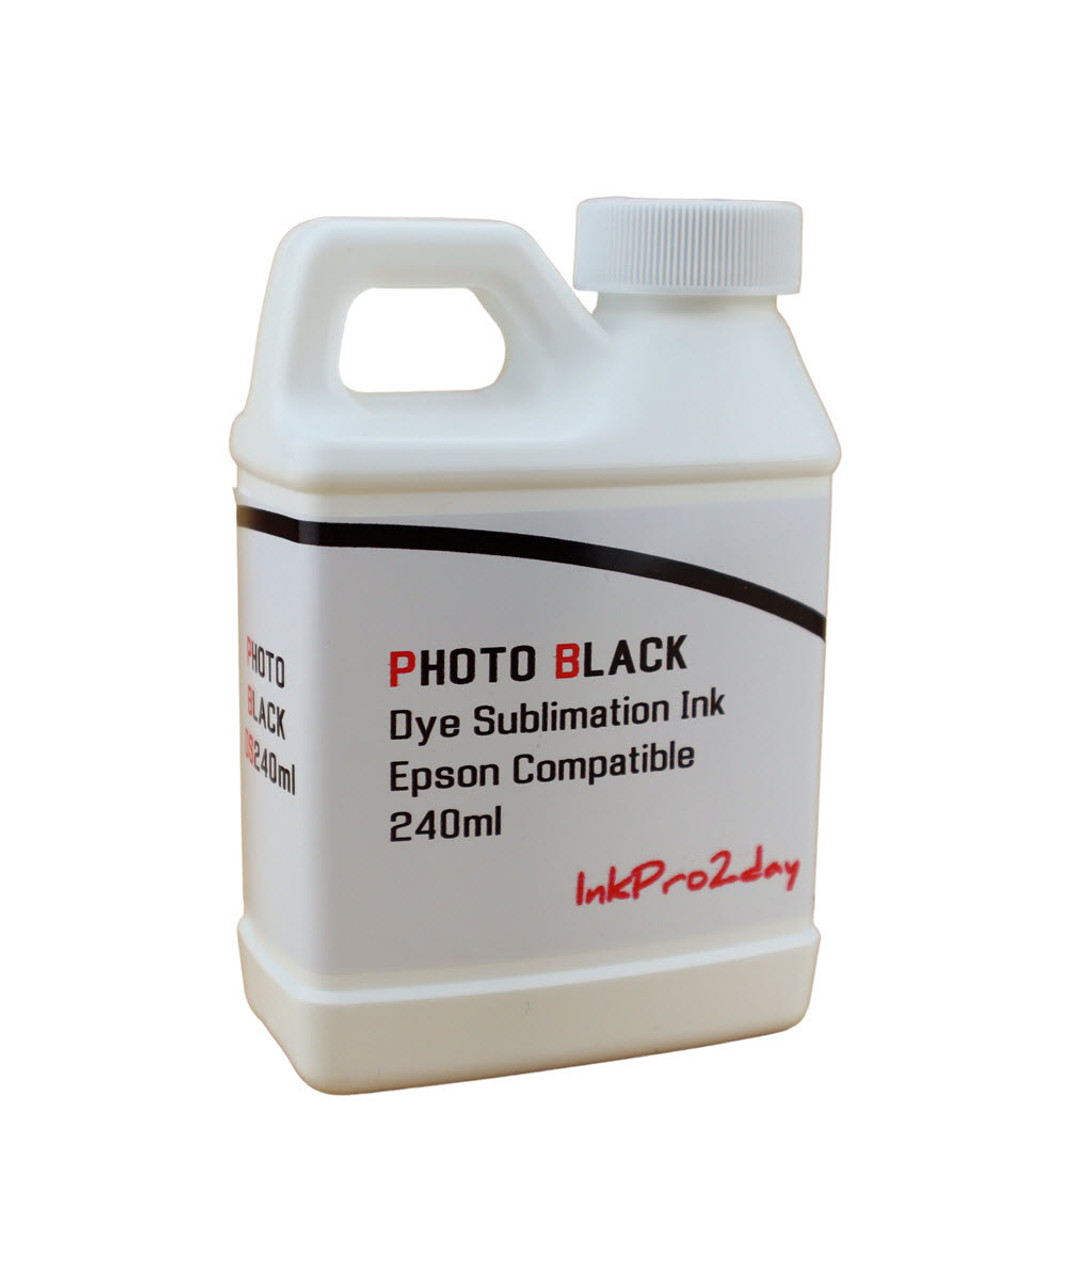 Photo Black 240ml Bottle Dye Sublimation Ink for Epson Stylus Pro 4880 printers